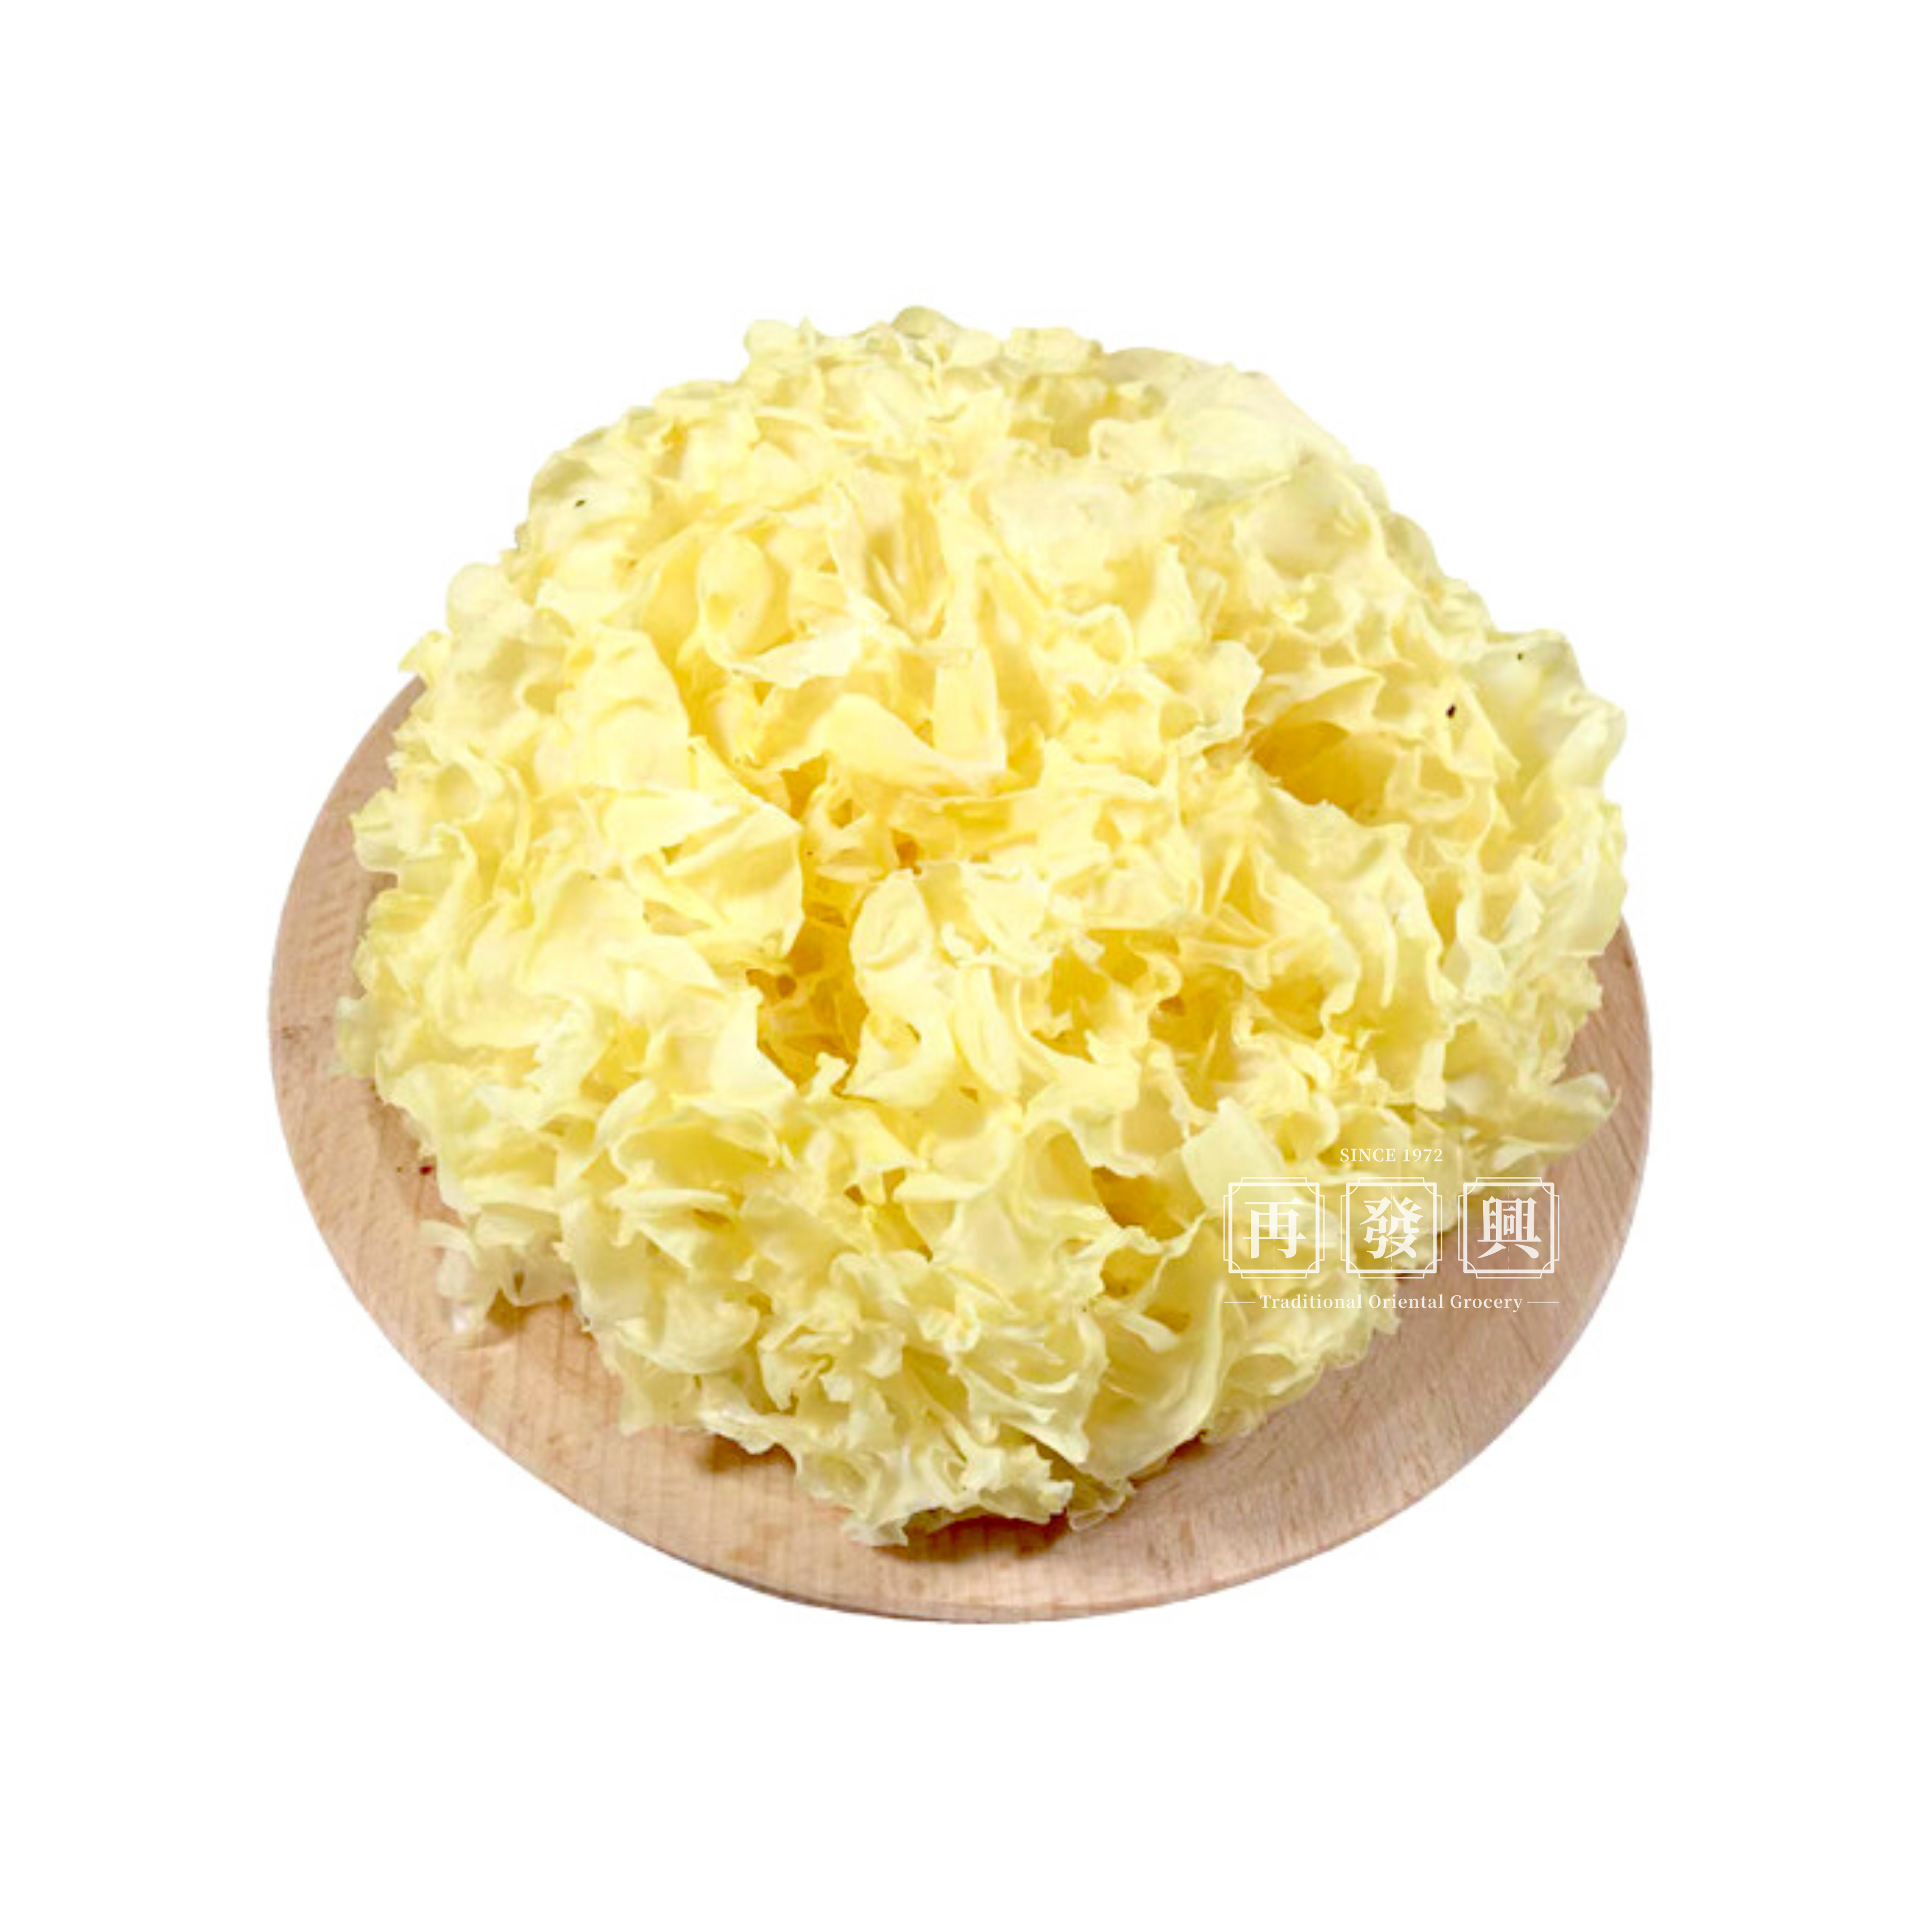 Whole Piece White Fungus (Huang Da Hua) 100g